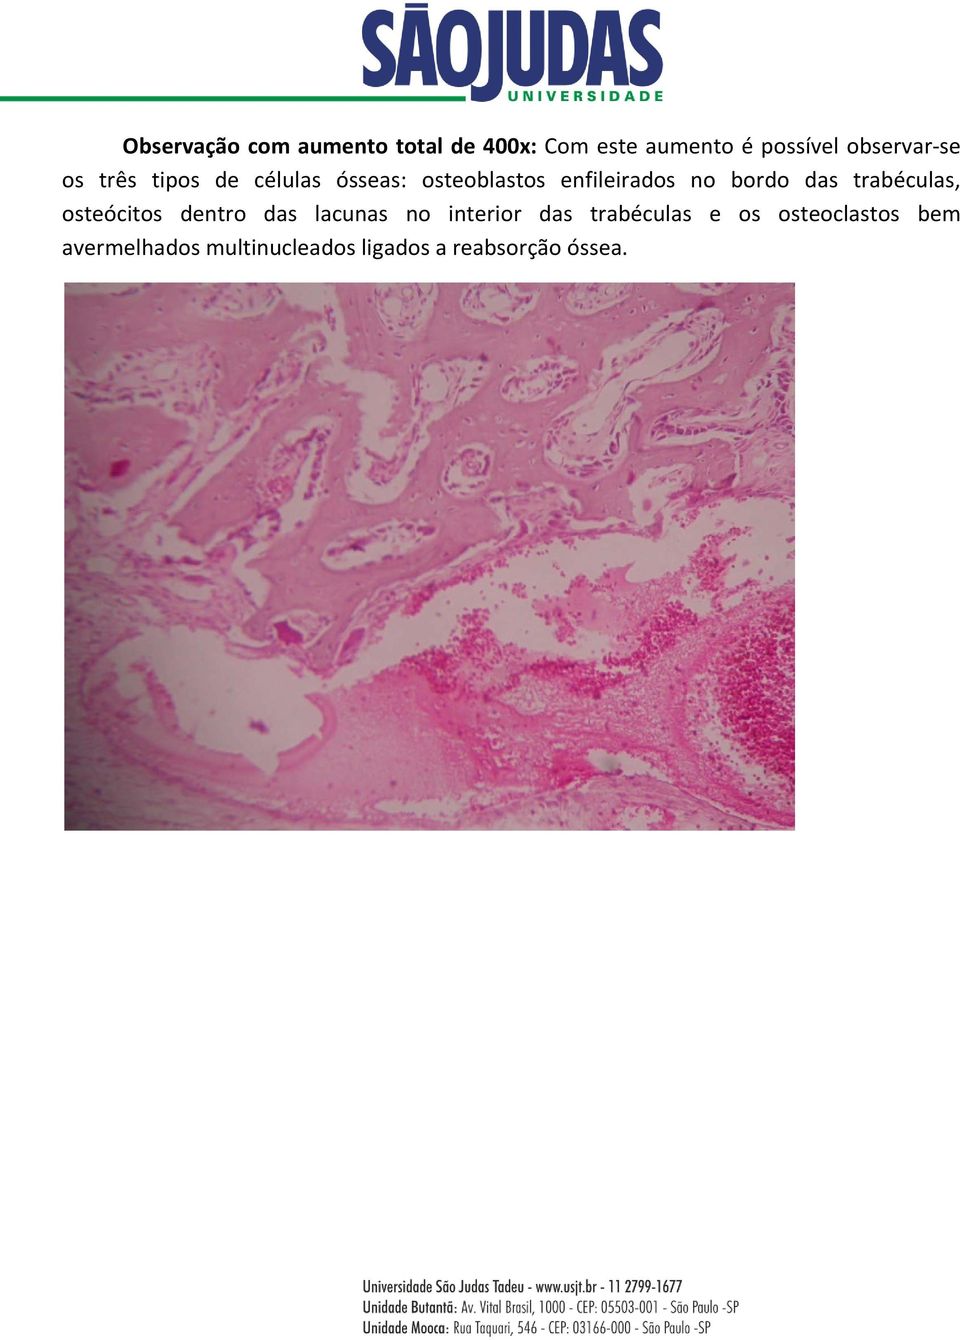 bordo das trabéculas, osteócitos dentro das lacunas no interior das